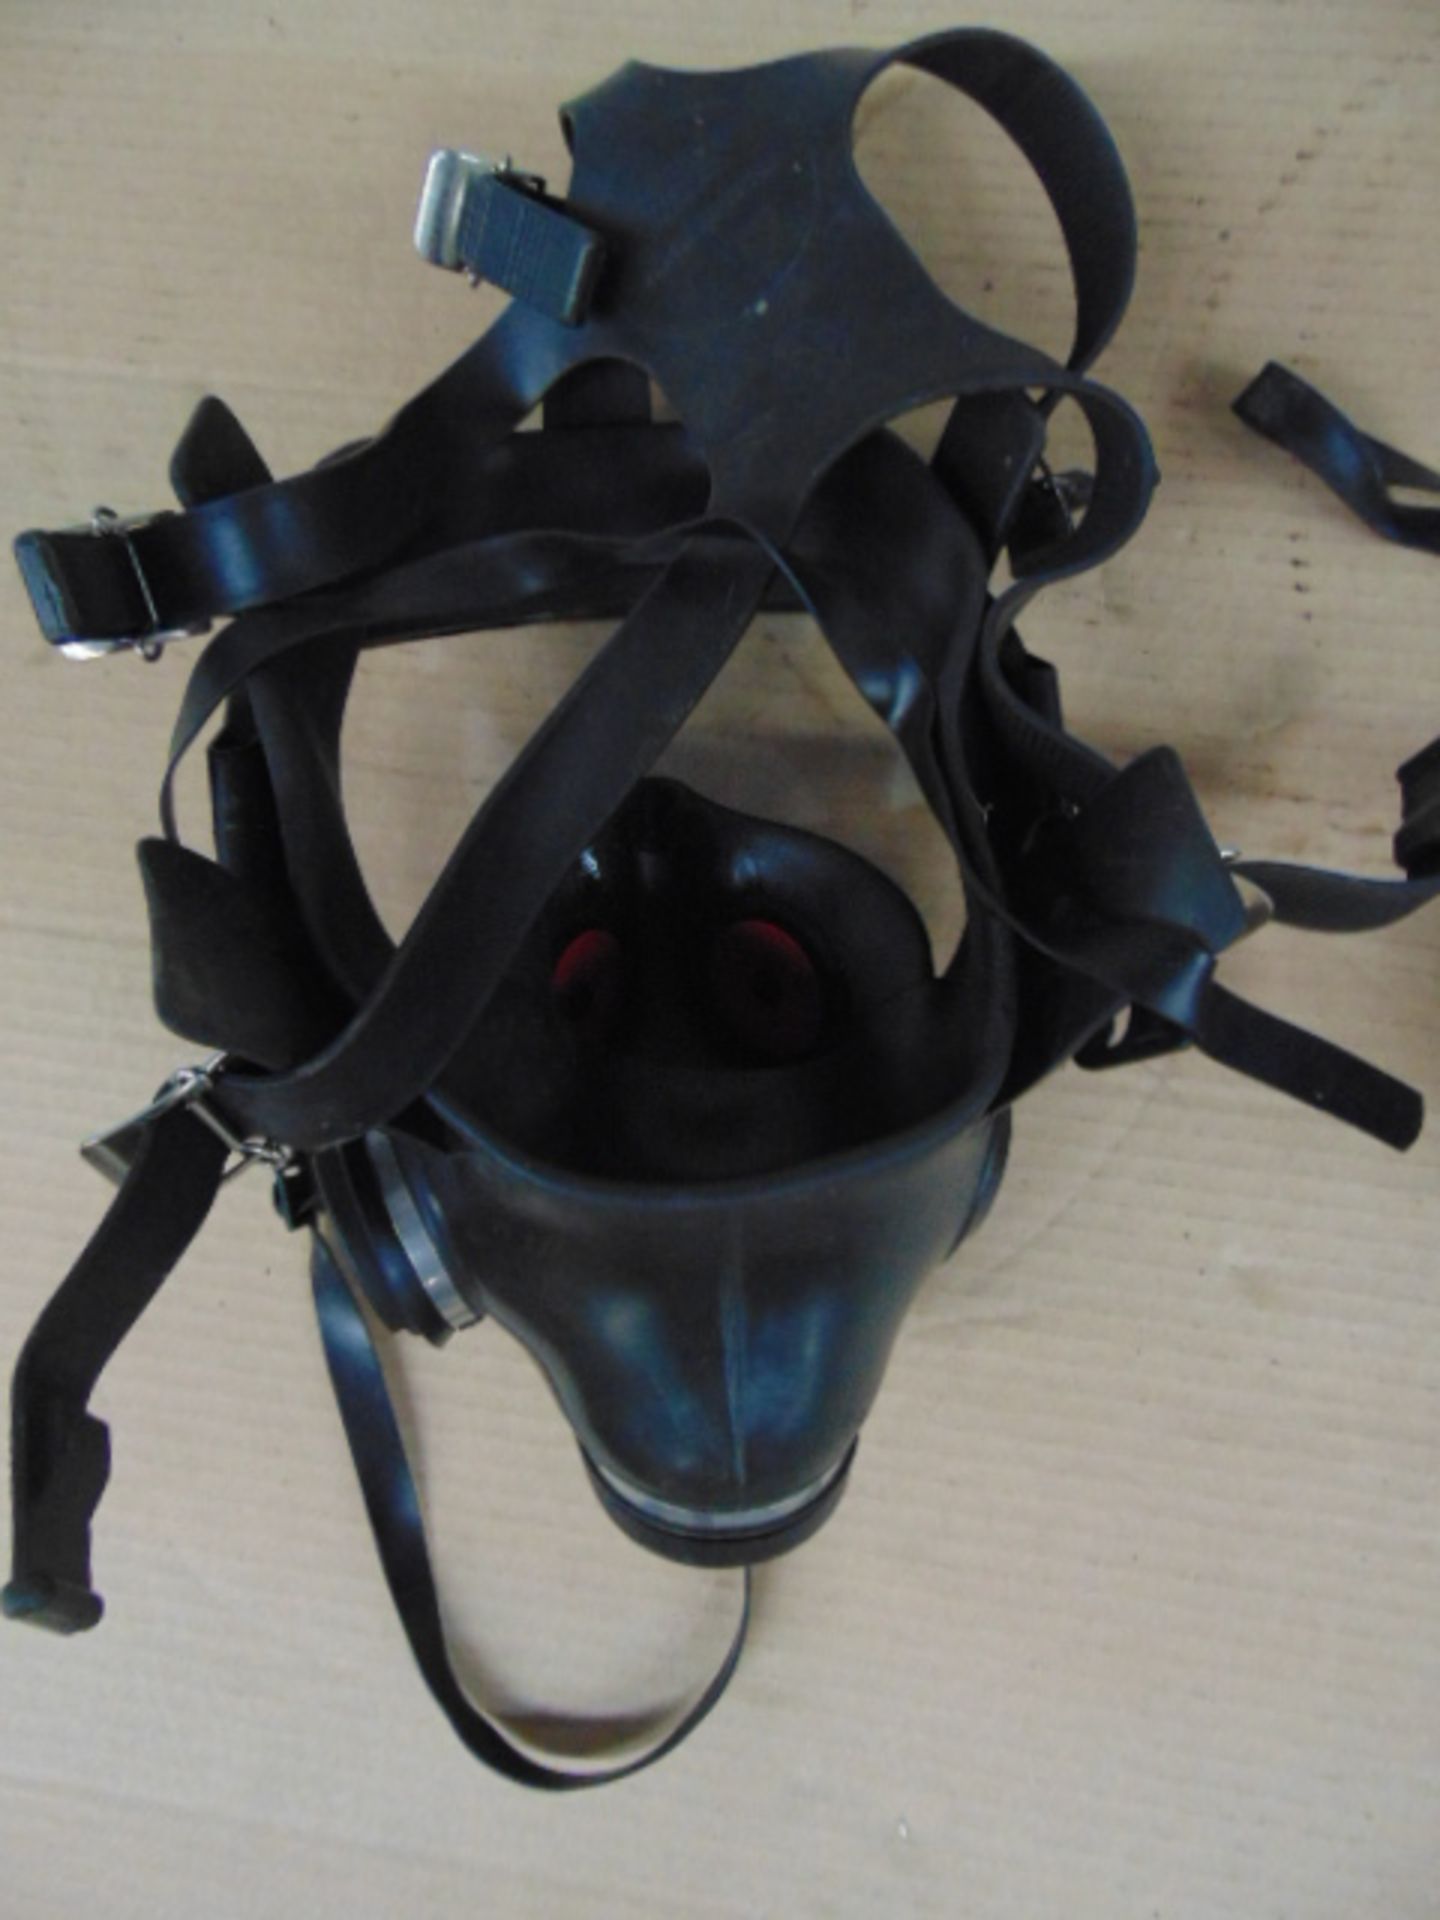 2 x Breathing Apparatus Masks - Image 5 of 5